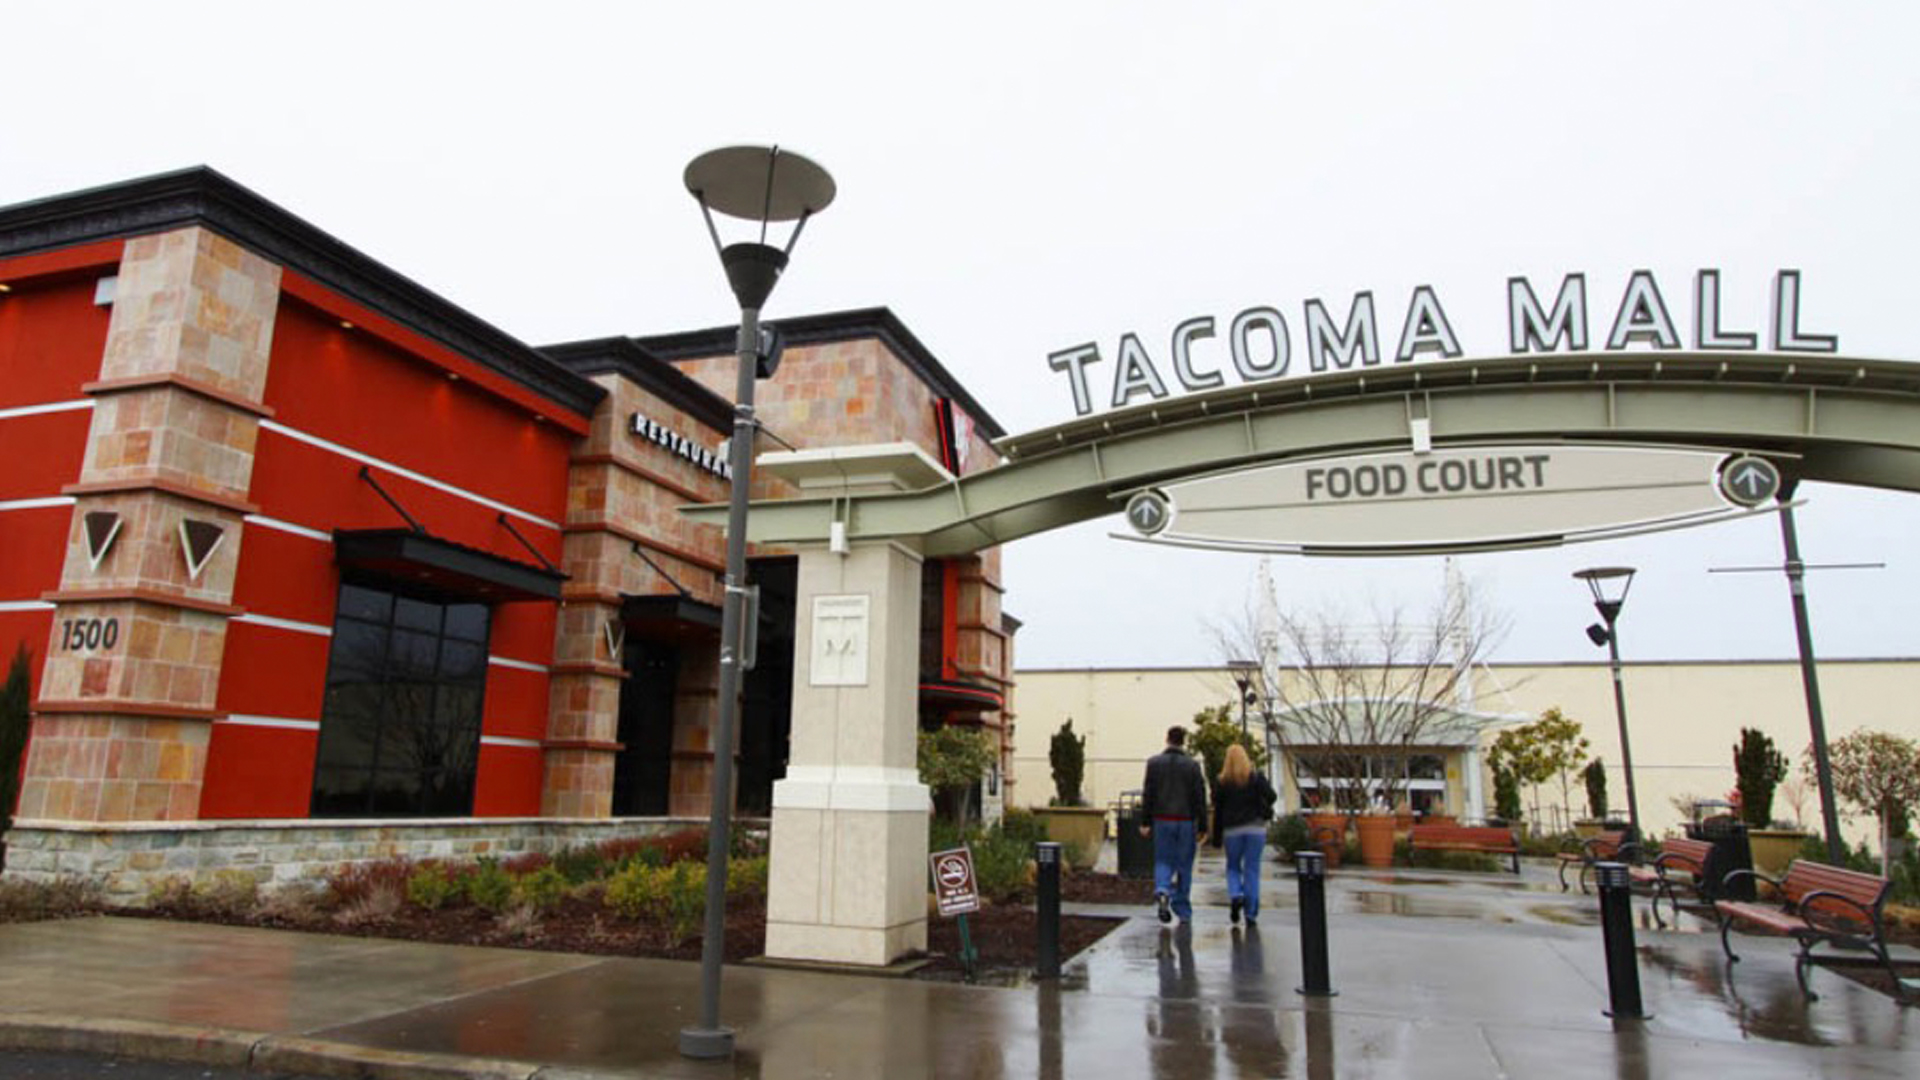 Tacoma Mall shooting – Washington stores lockdown following reports of shots fired. Employees evacuated.